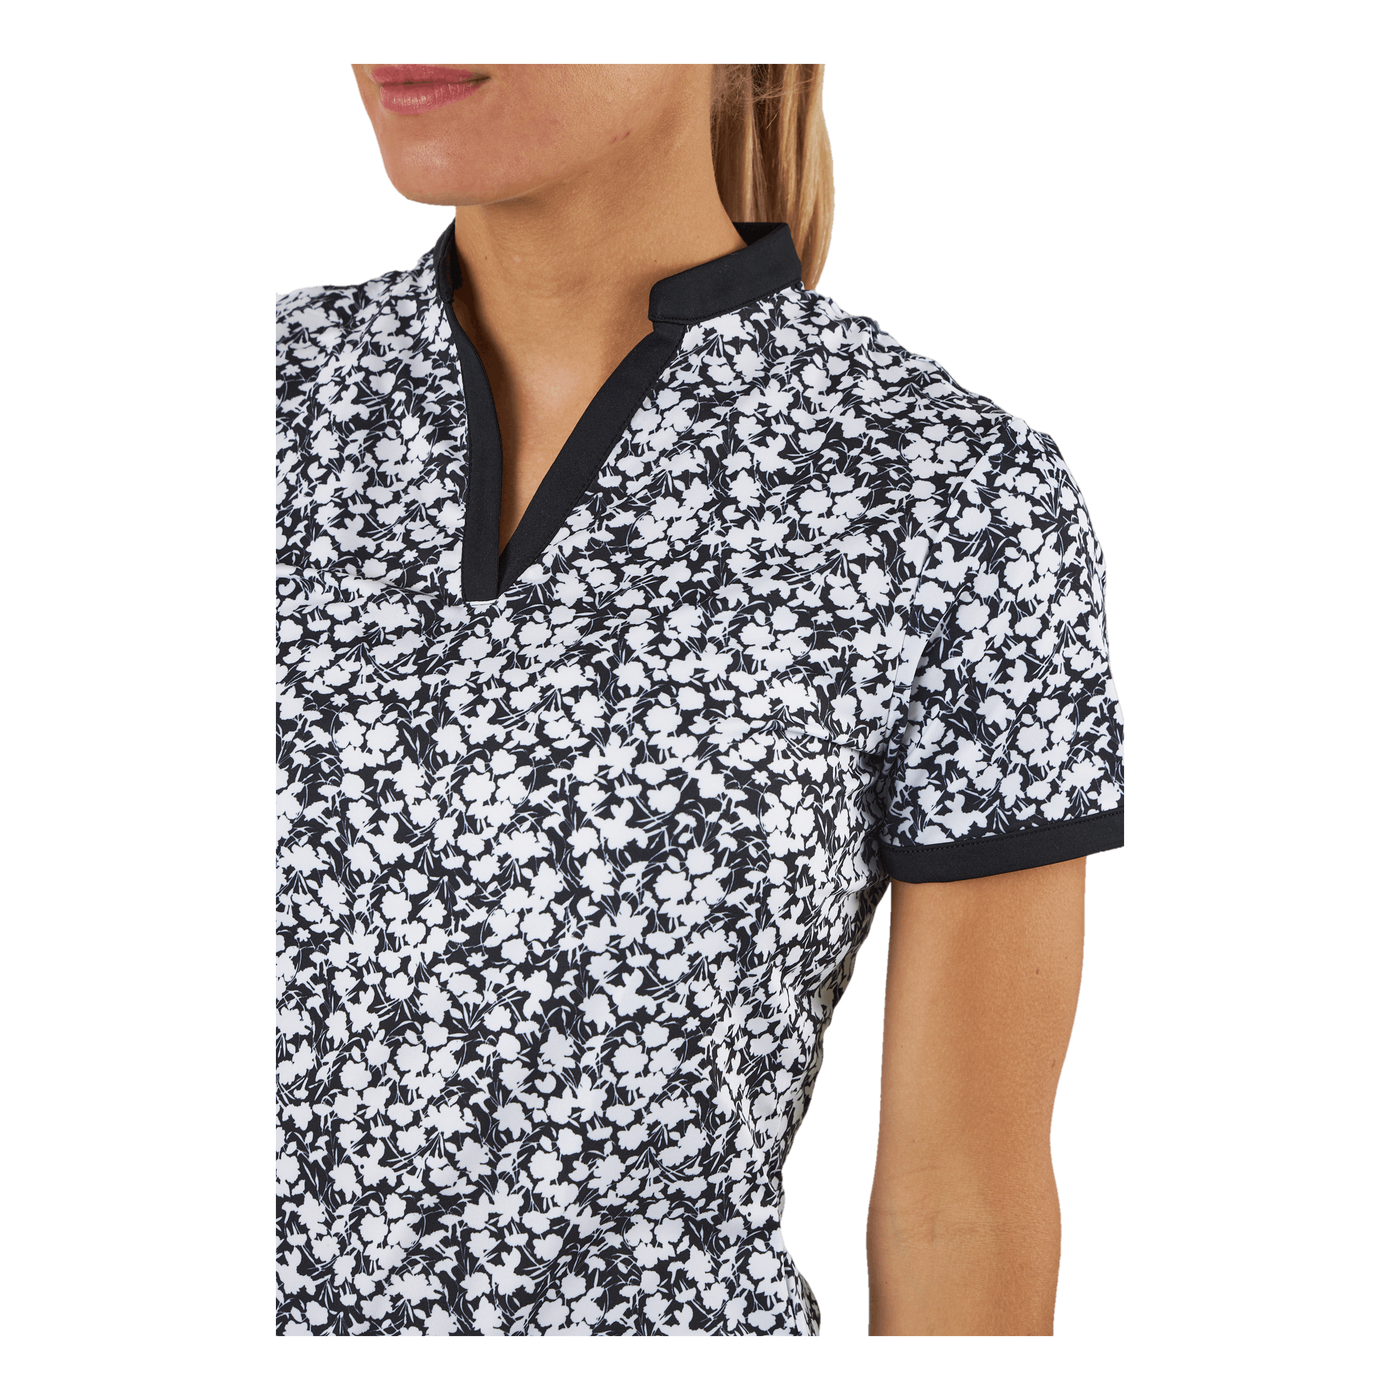 Ultimate365 Golf Polo Shirt Black